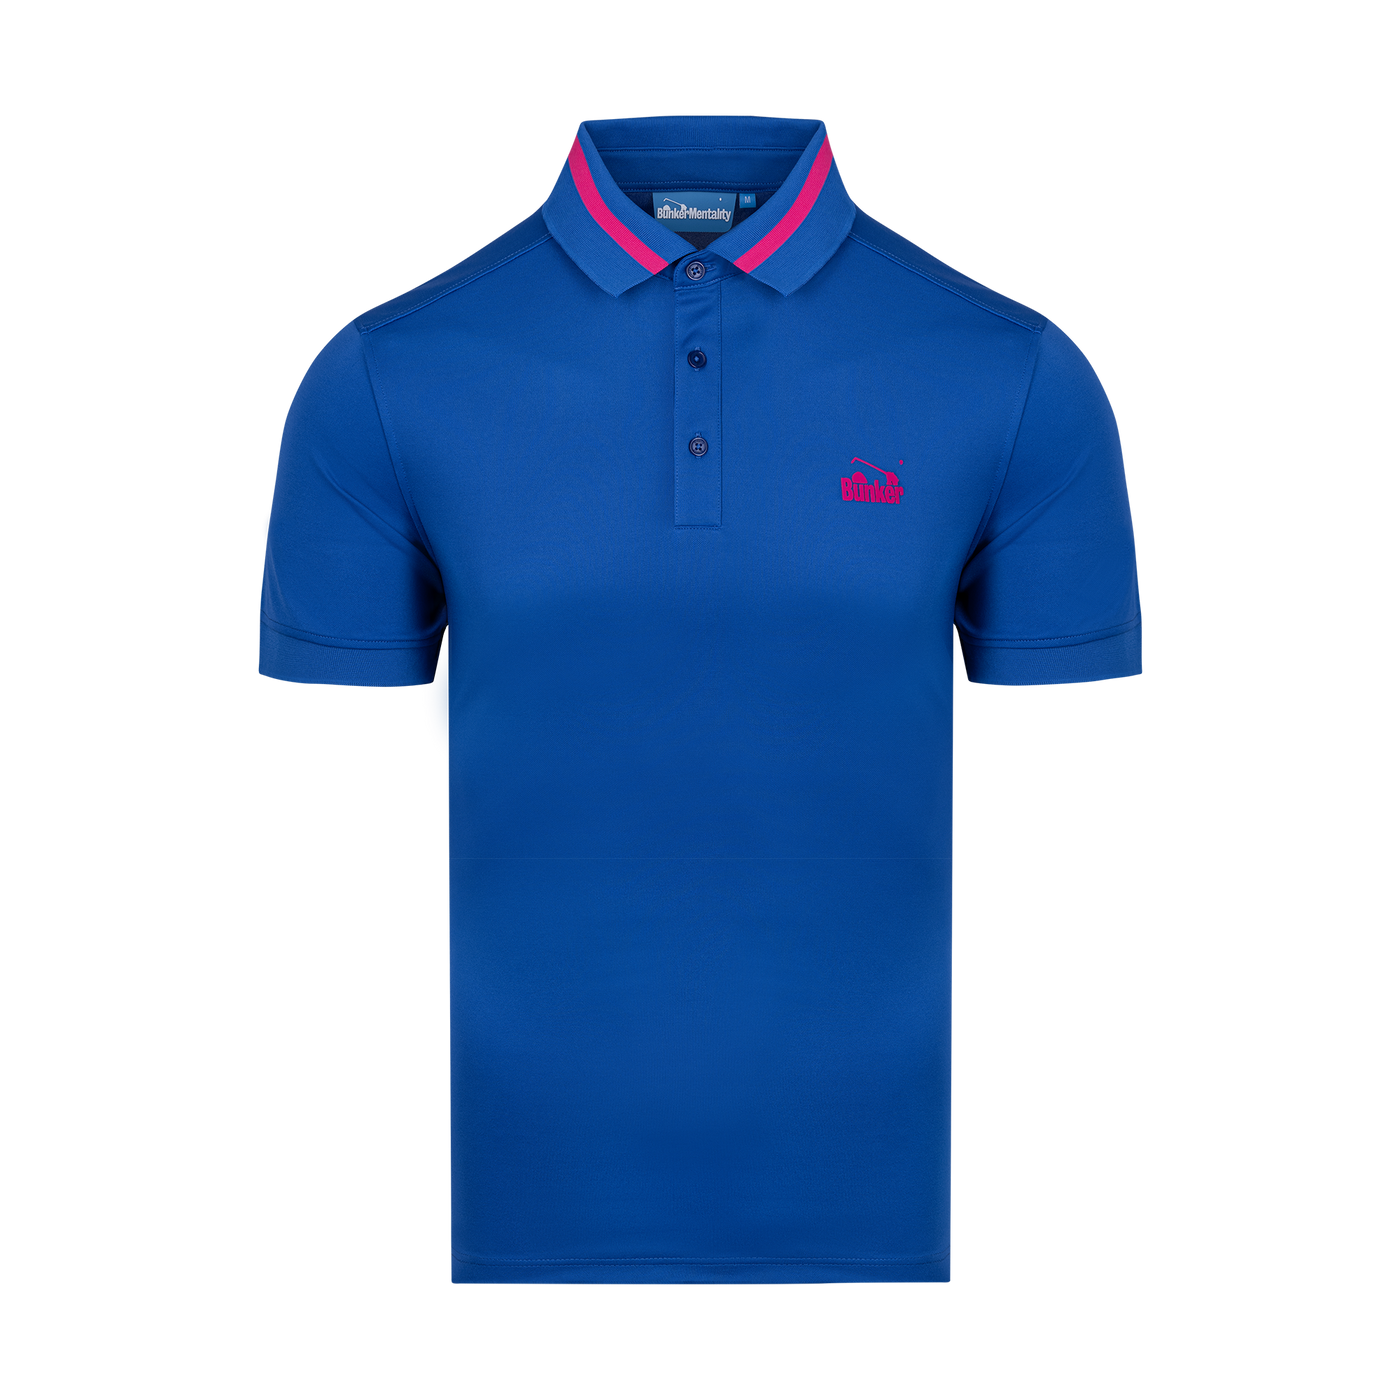 Bunker Mentality Logo Blue Golf Shirt | Golf Polo Shirts & Tops